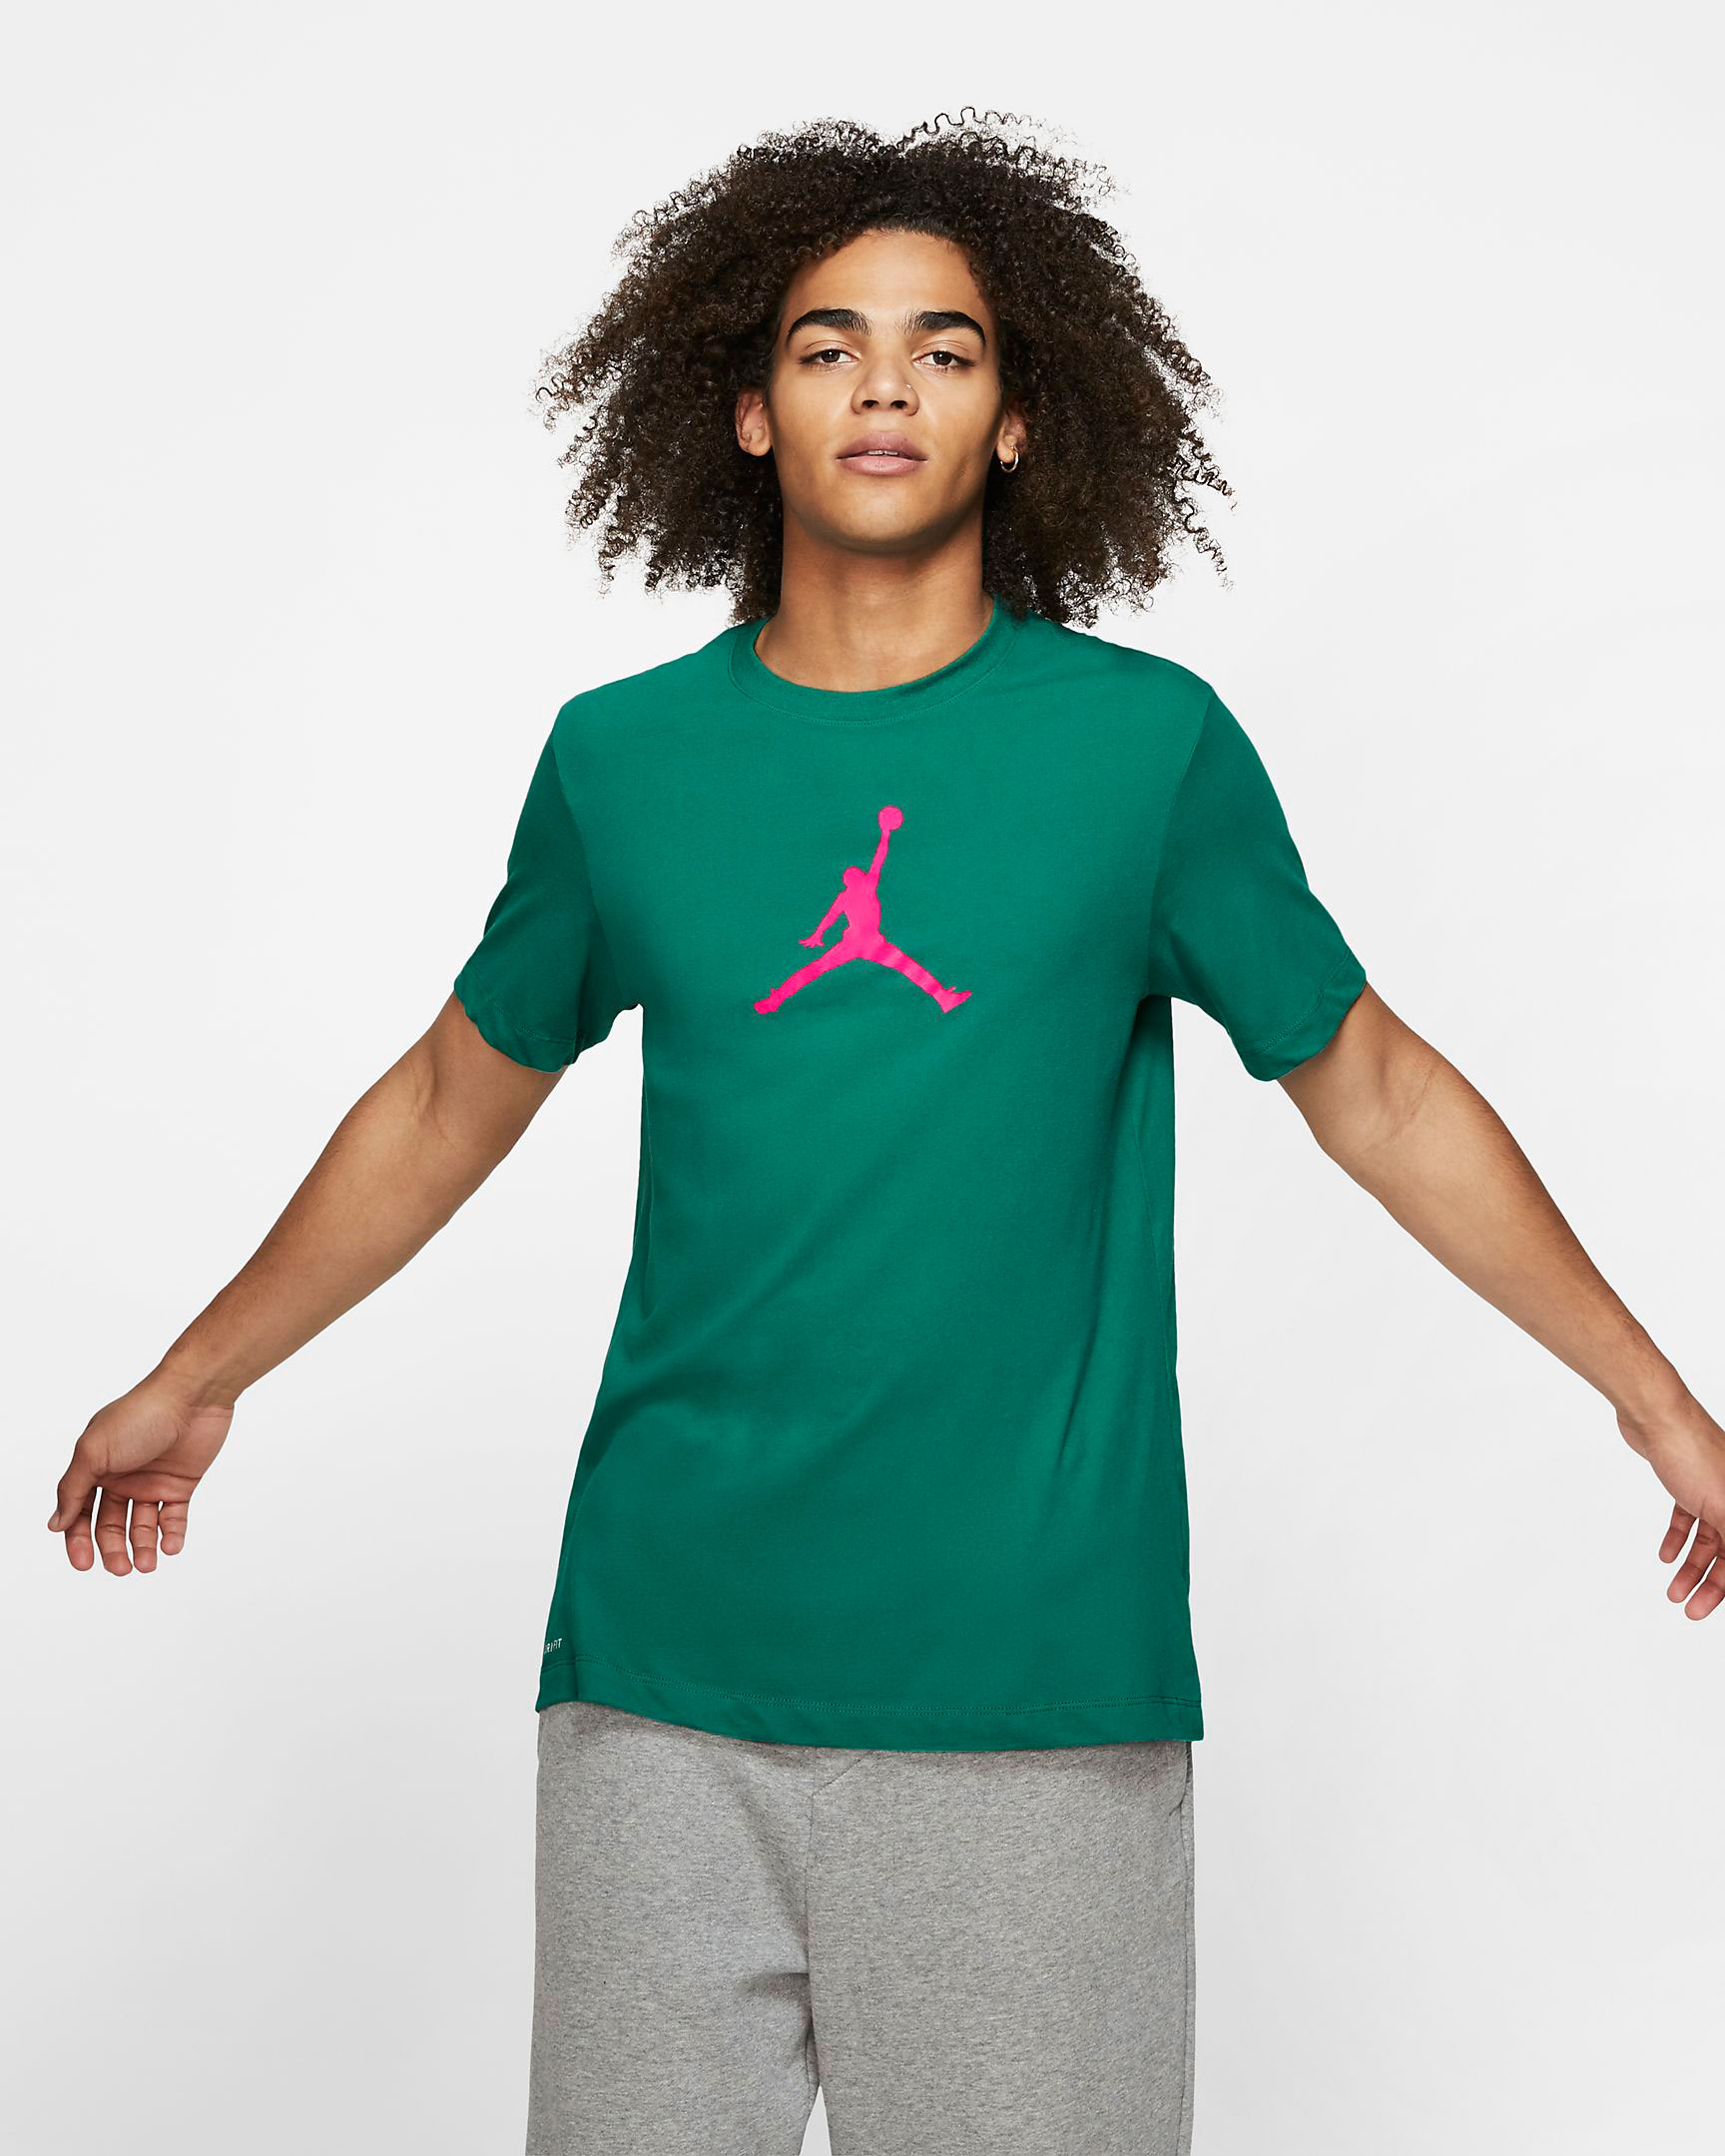 jordan-watermelon-green-pink-shirt-2